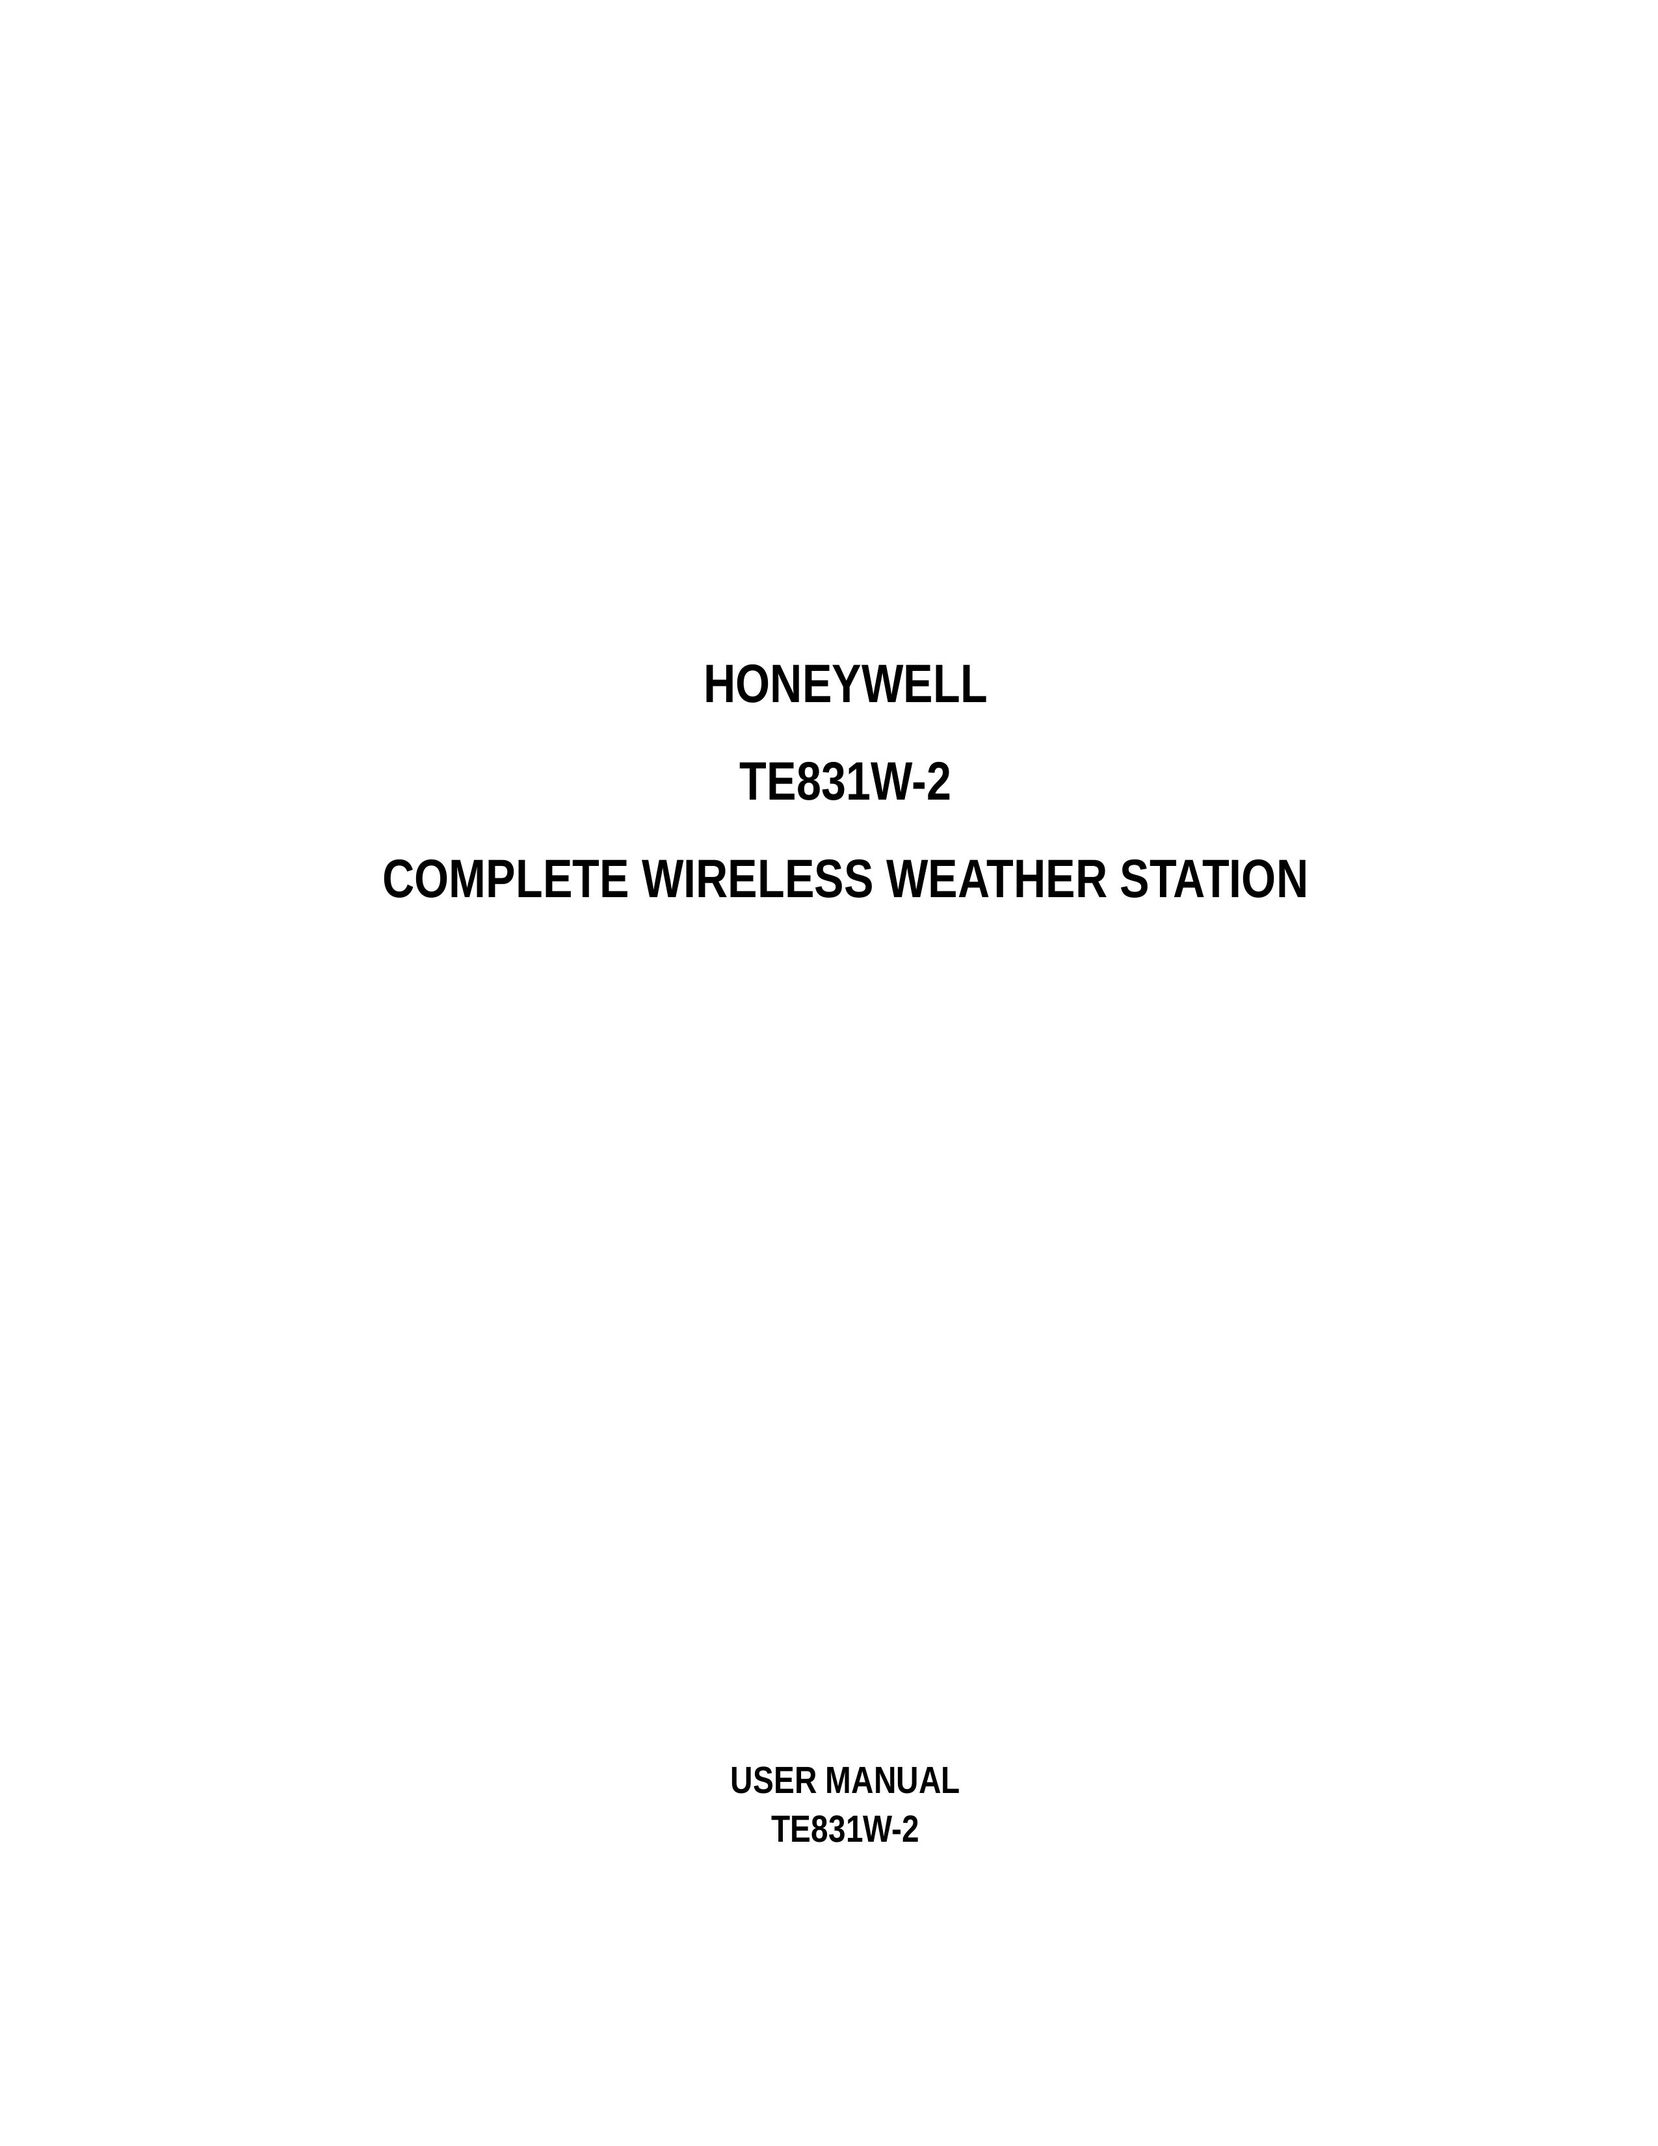 Honeywell TE831W-2 Portable Radio User Manual